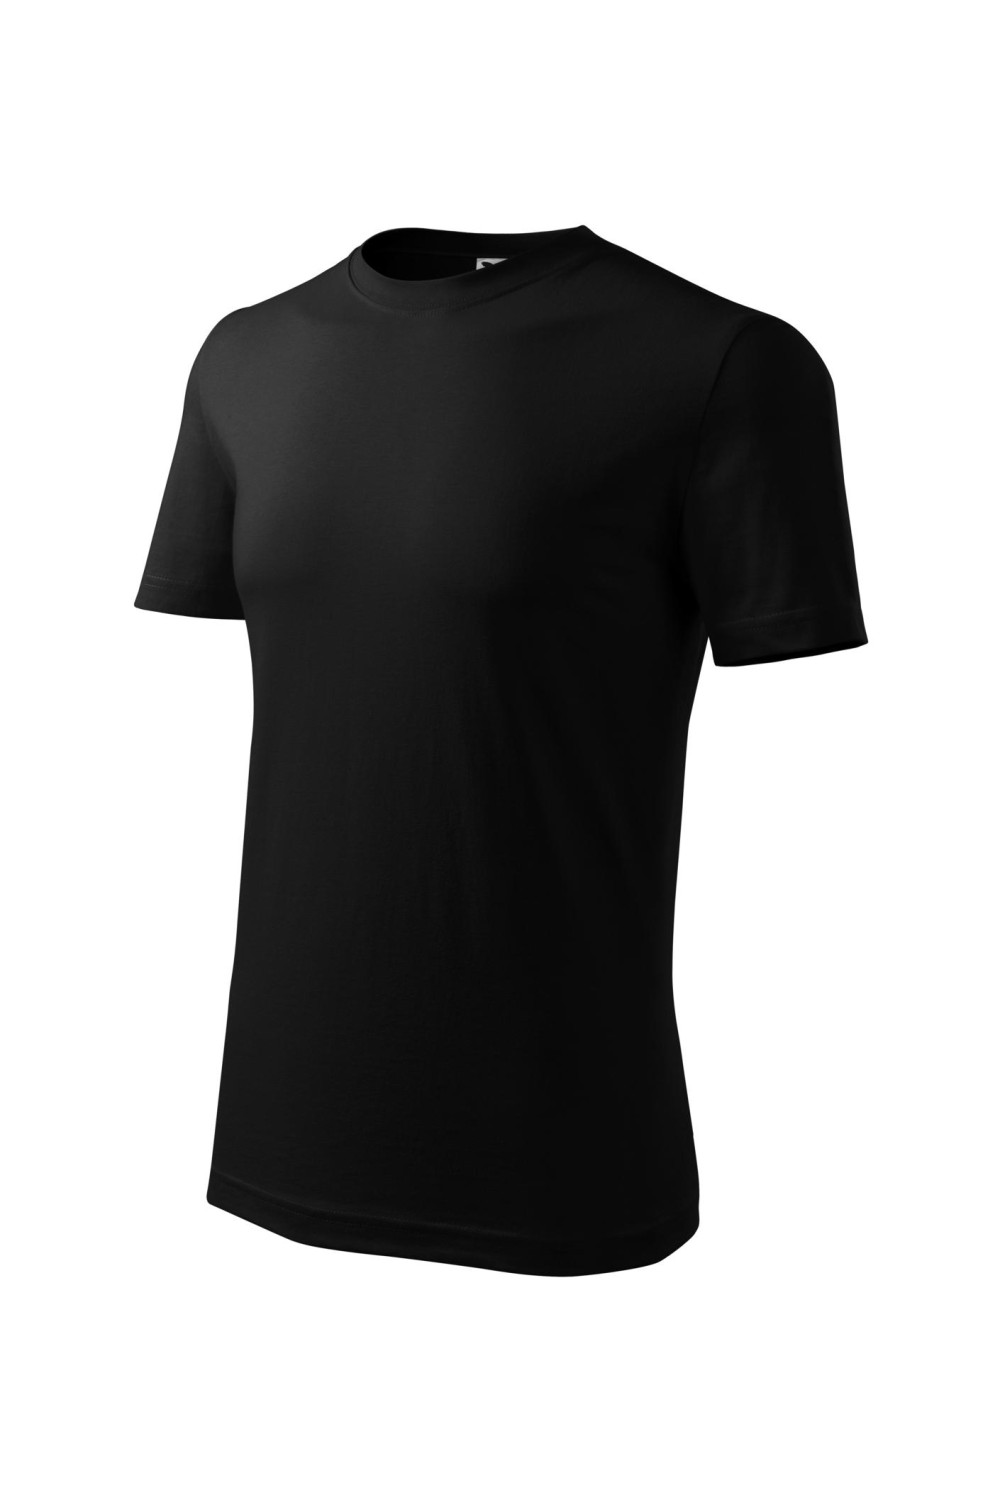 Koszulka męska 100% bawełna CLASSIC 132 czarny